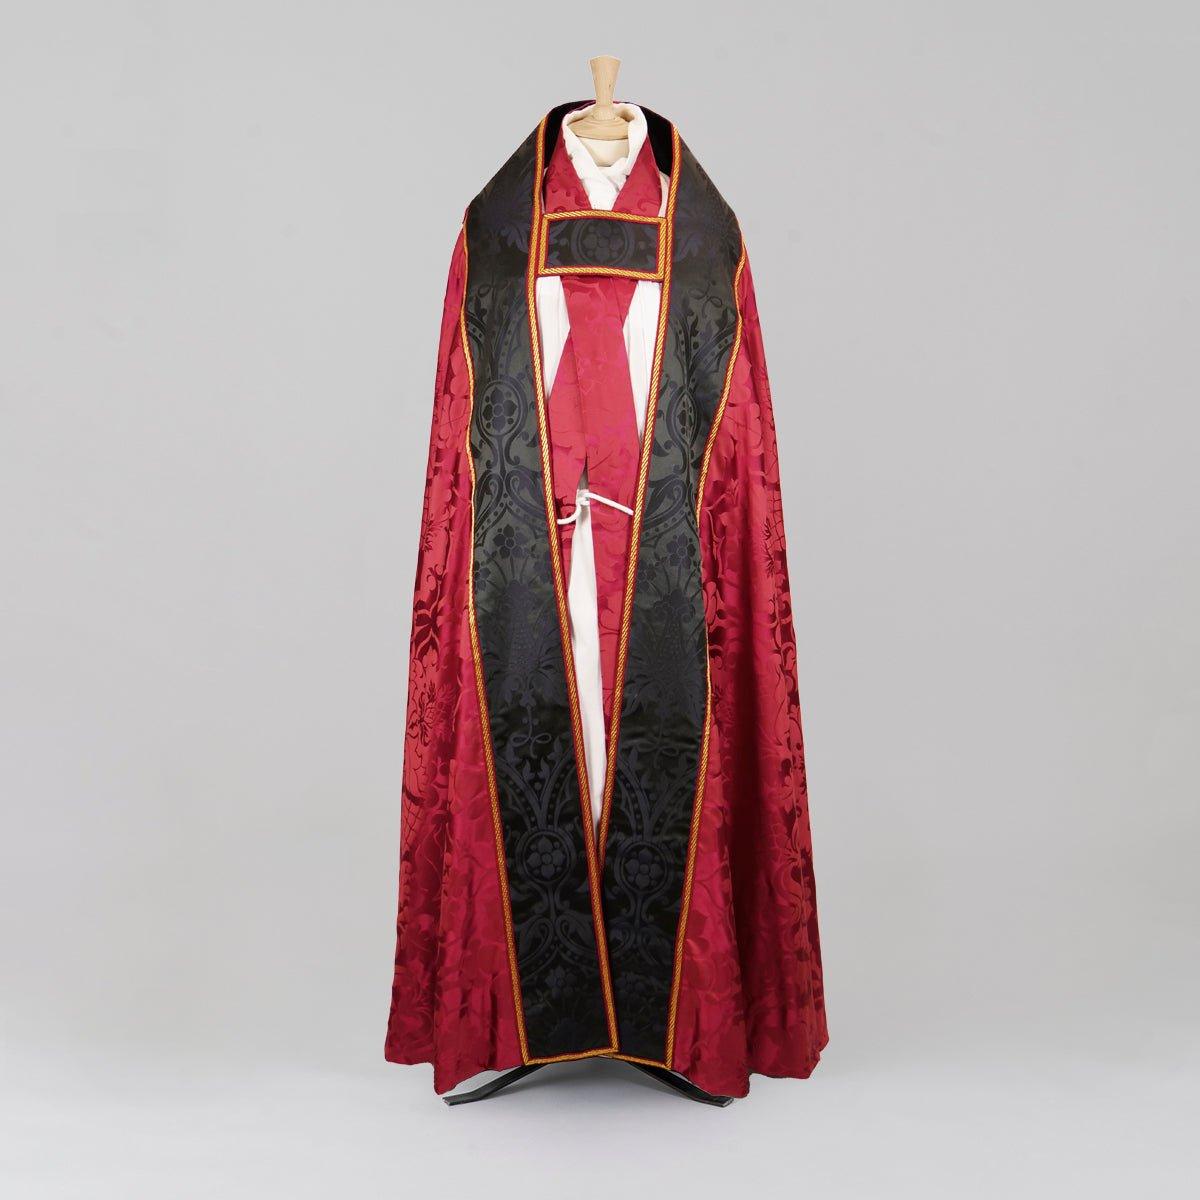 Westminster style Cope in Comper Rose 'Bellini' Silk with Sarum Indigo 'Shrewsbury' - Watts & Co.